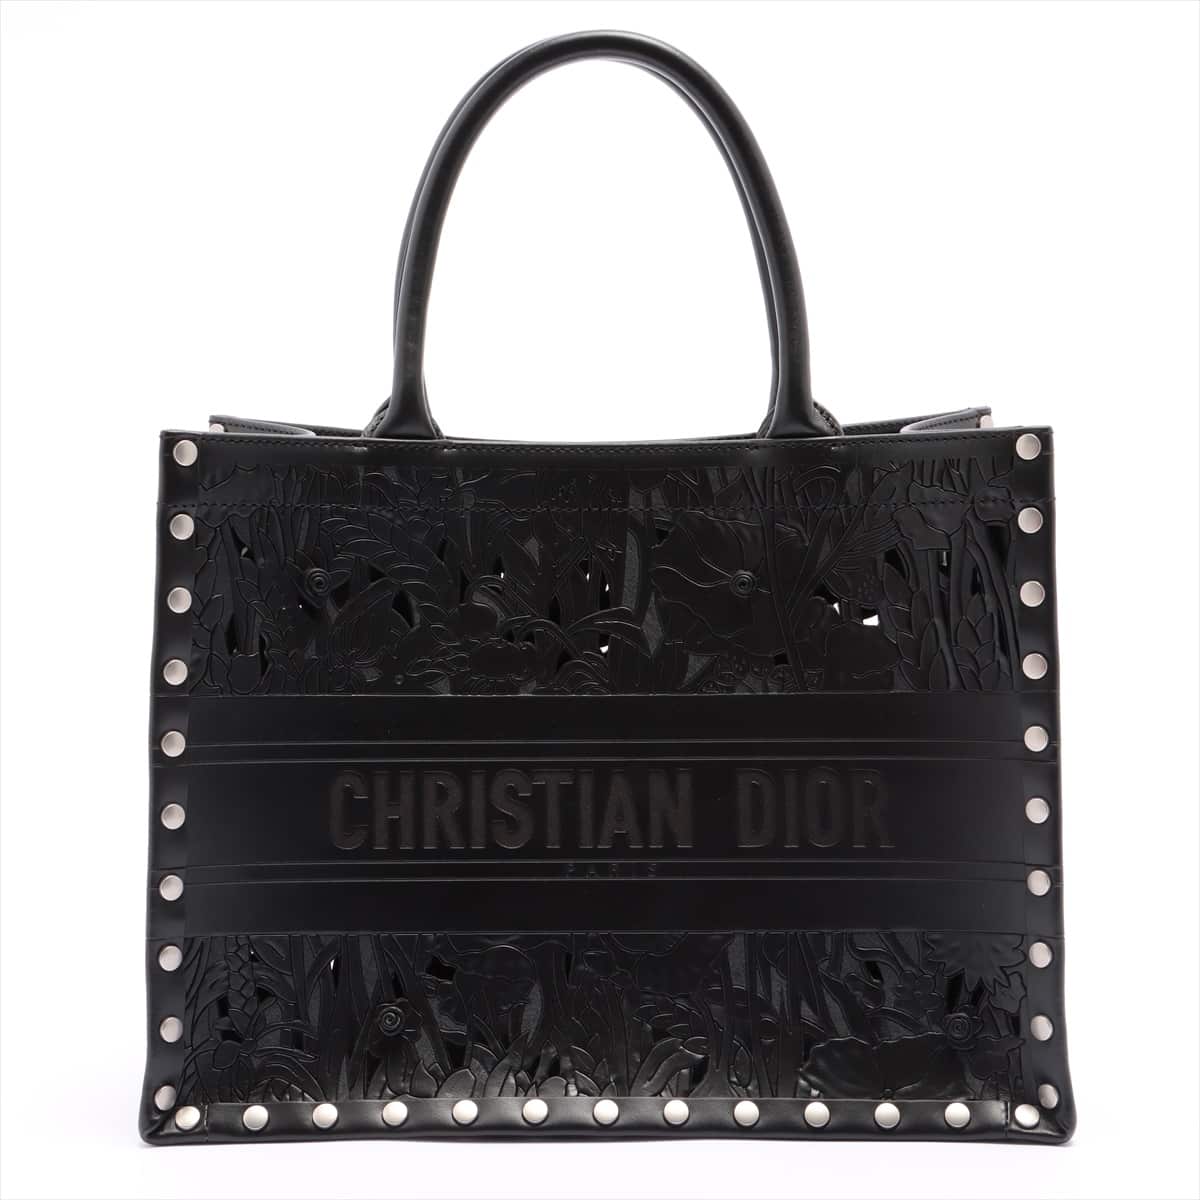 Christian Dior Book Tote Leather Tote bag Black